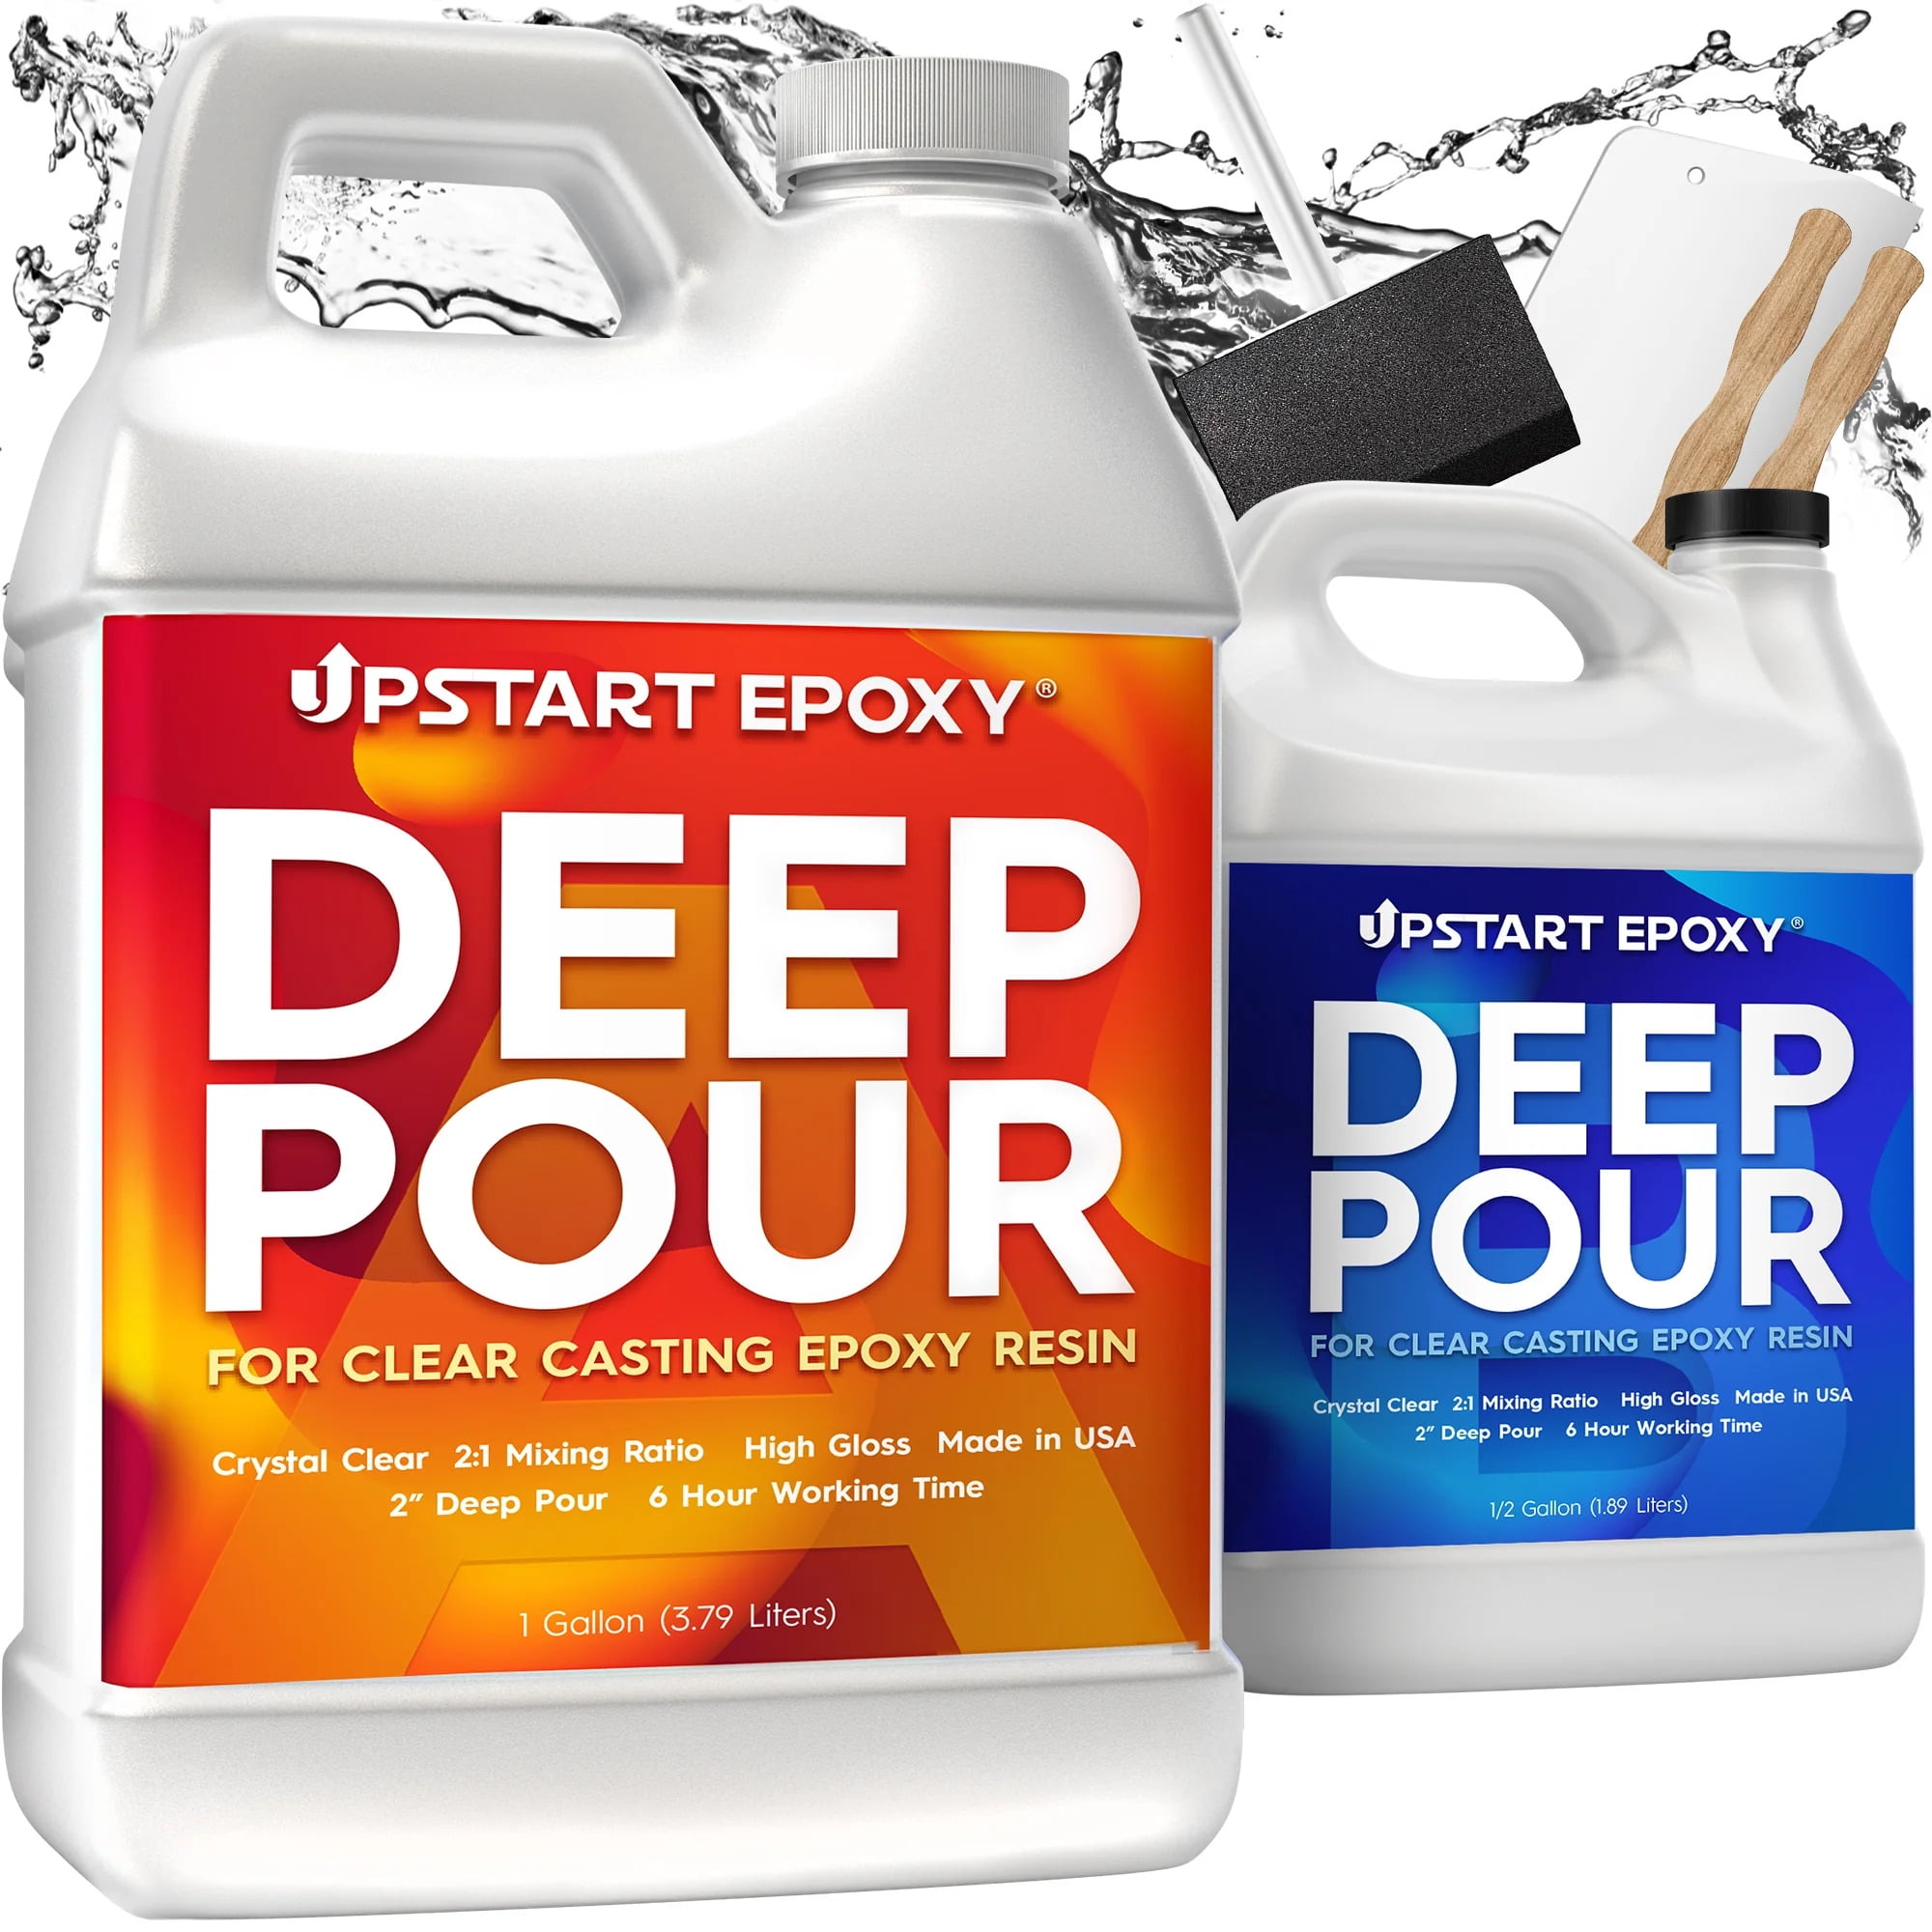 Craft Resin Deep Pour - 1.5 Gallon